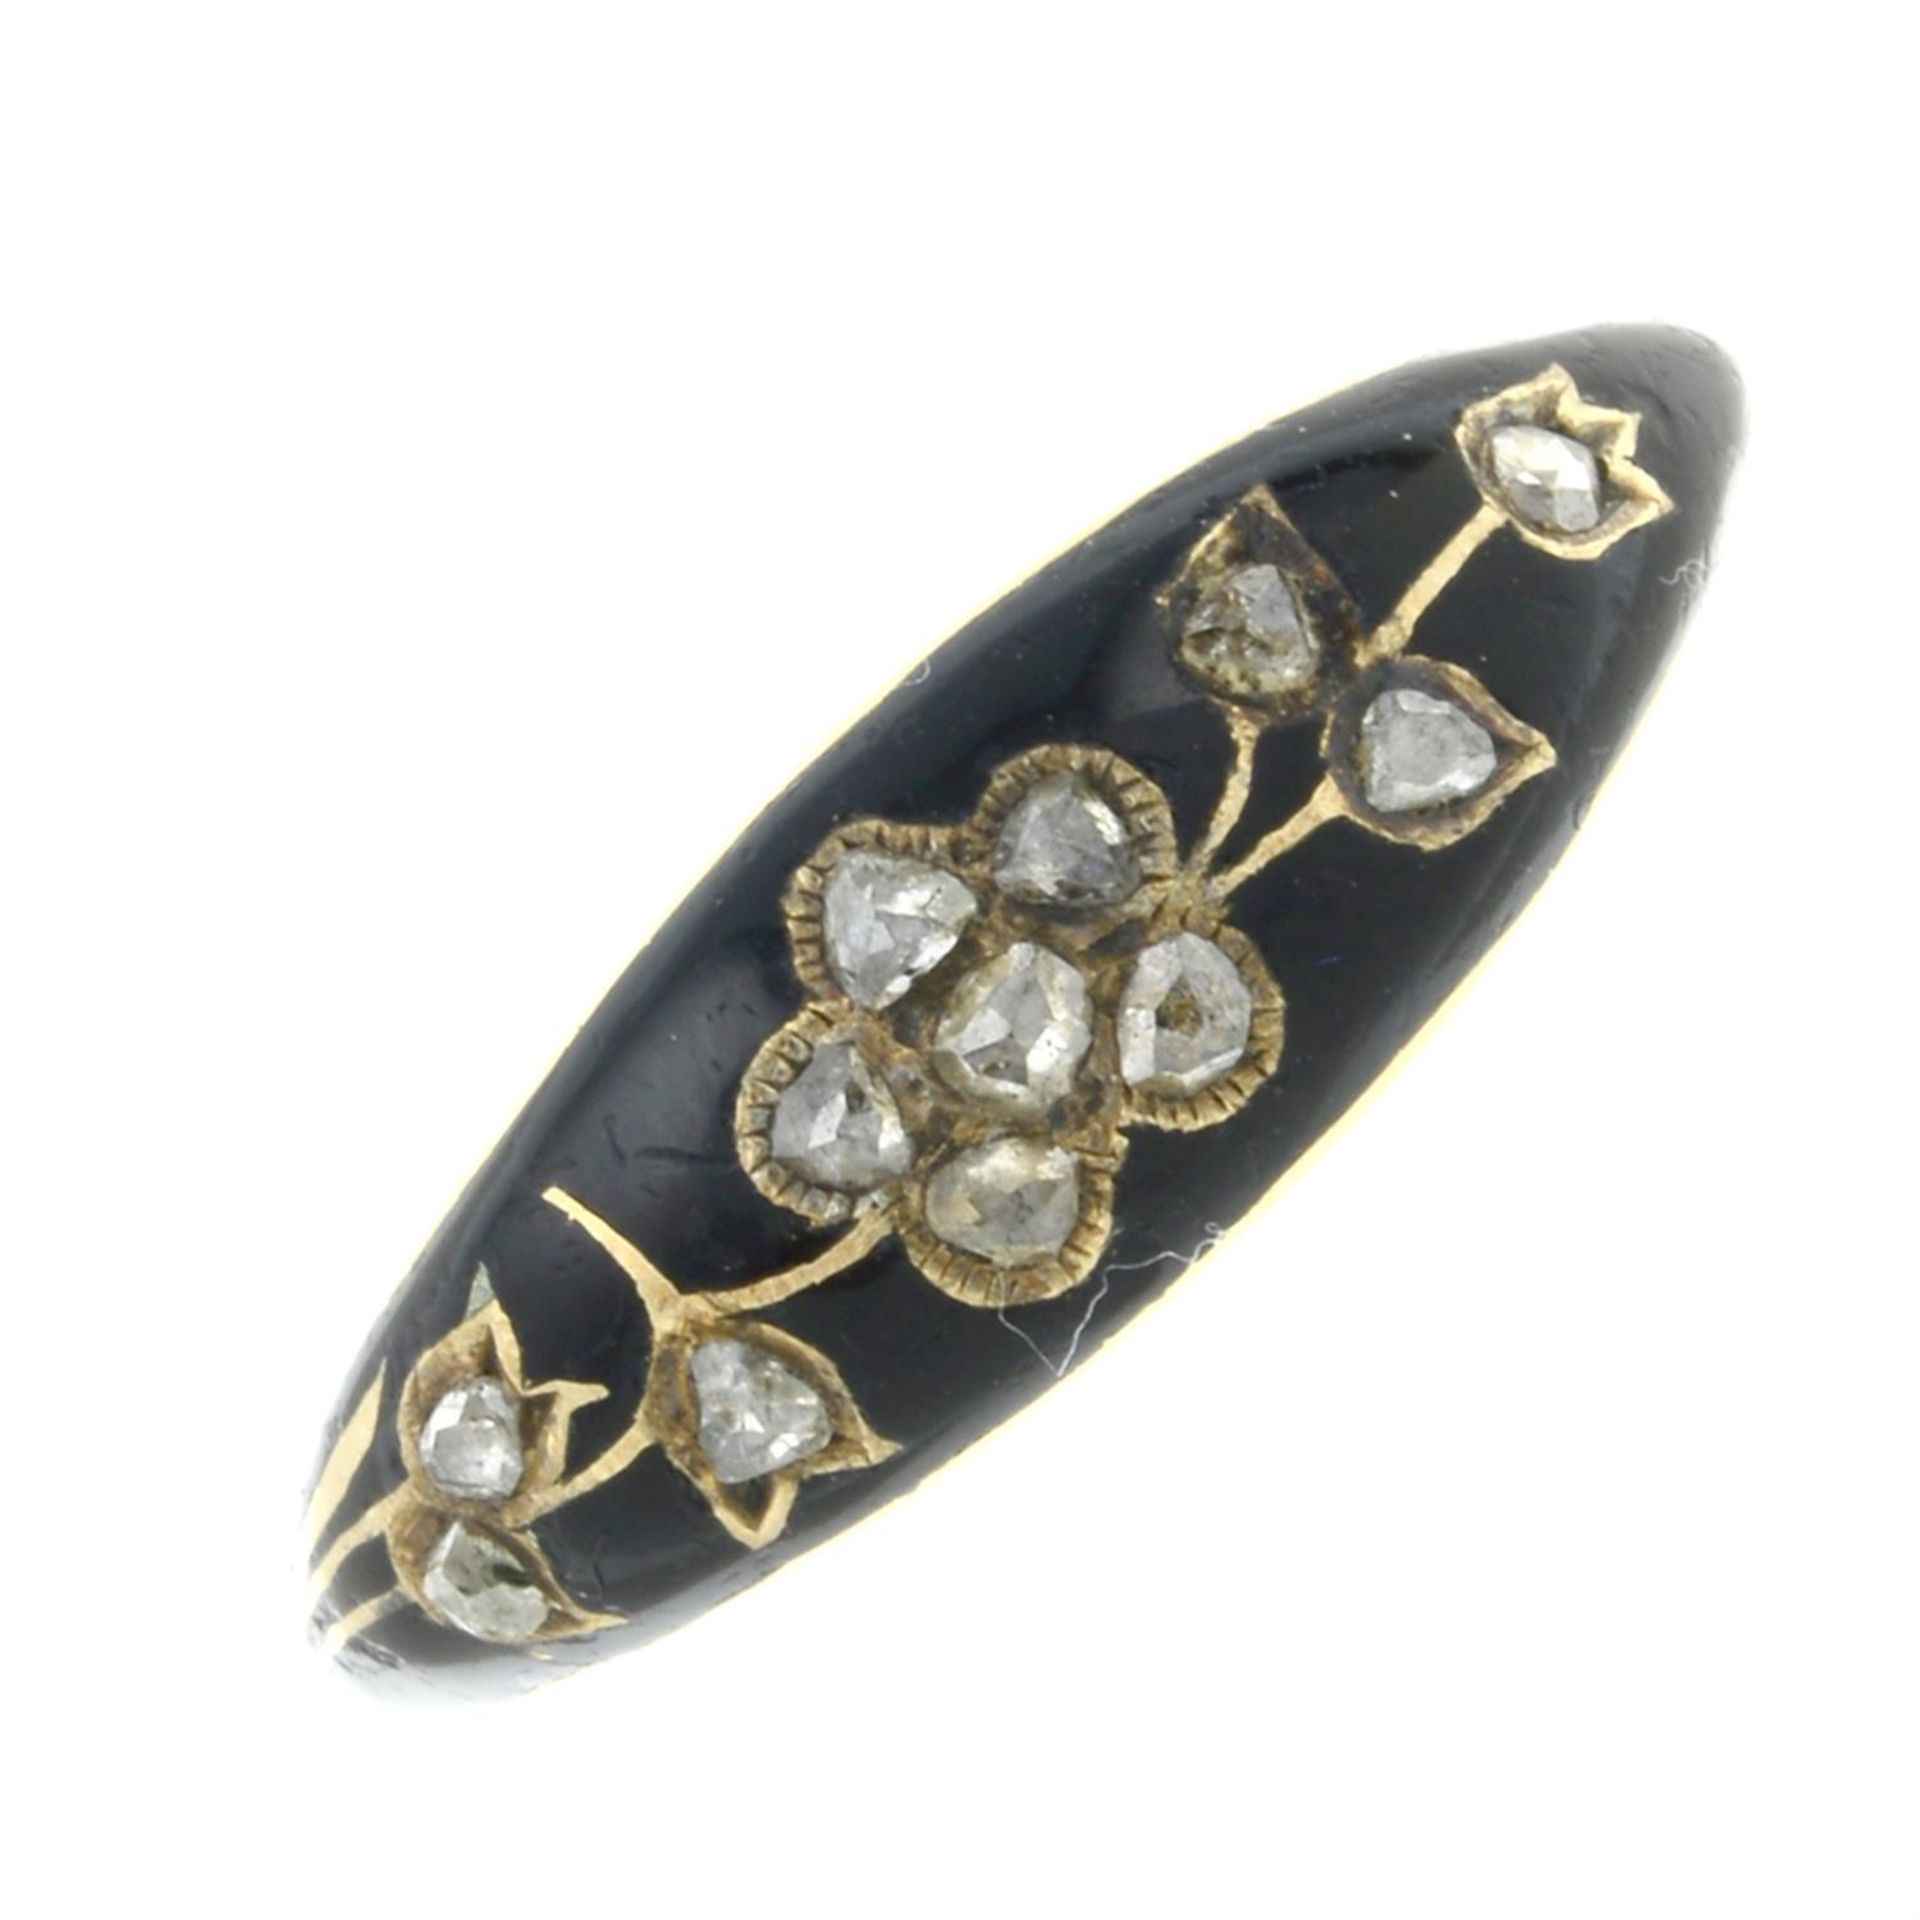 A late 19th century black enamel and rose-cut diamond memorial ring.